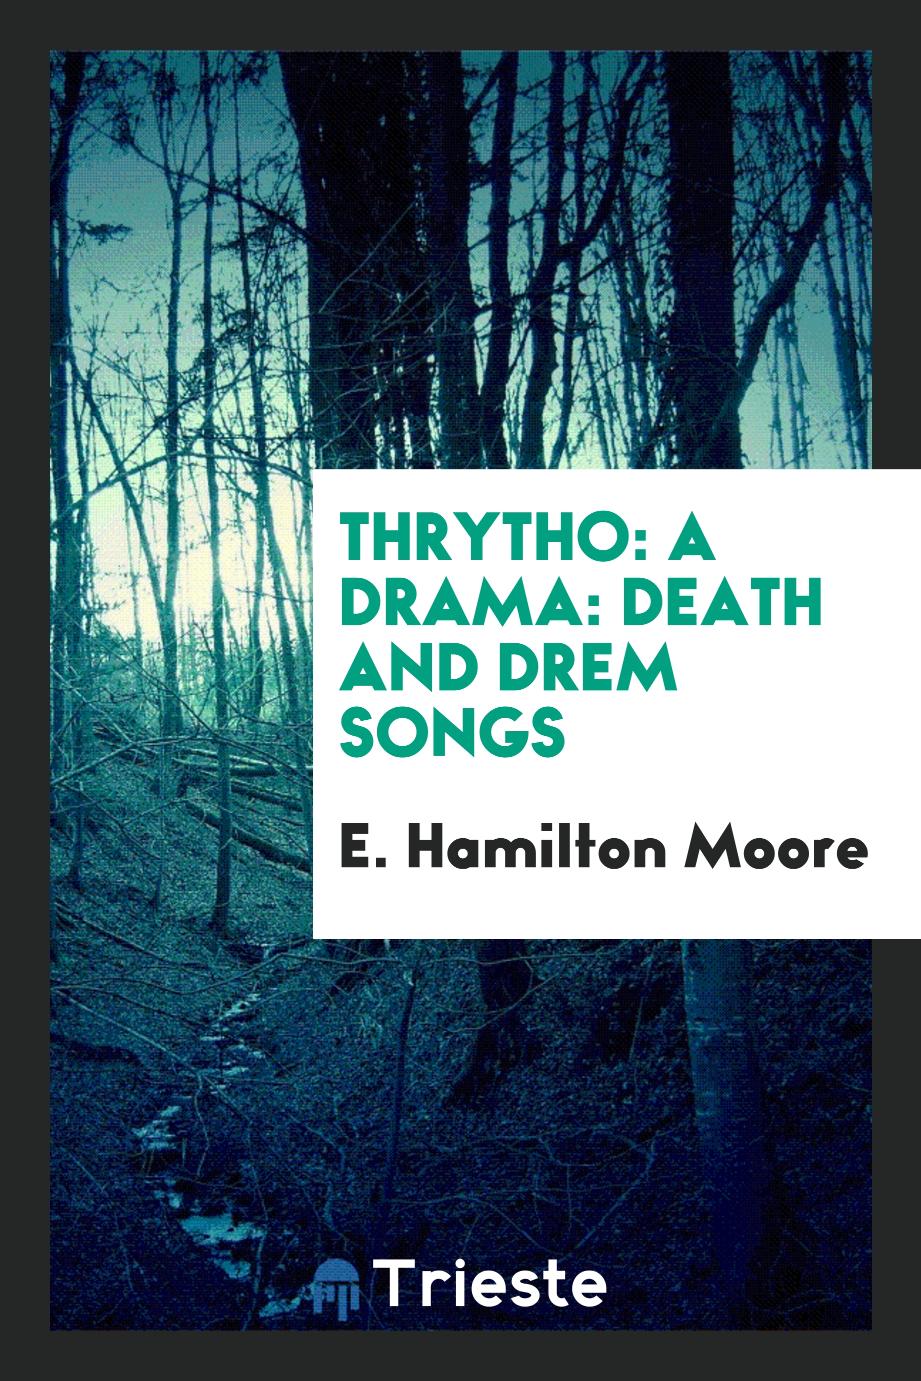 Thrytho: A Drama: Death and Drem Songs